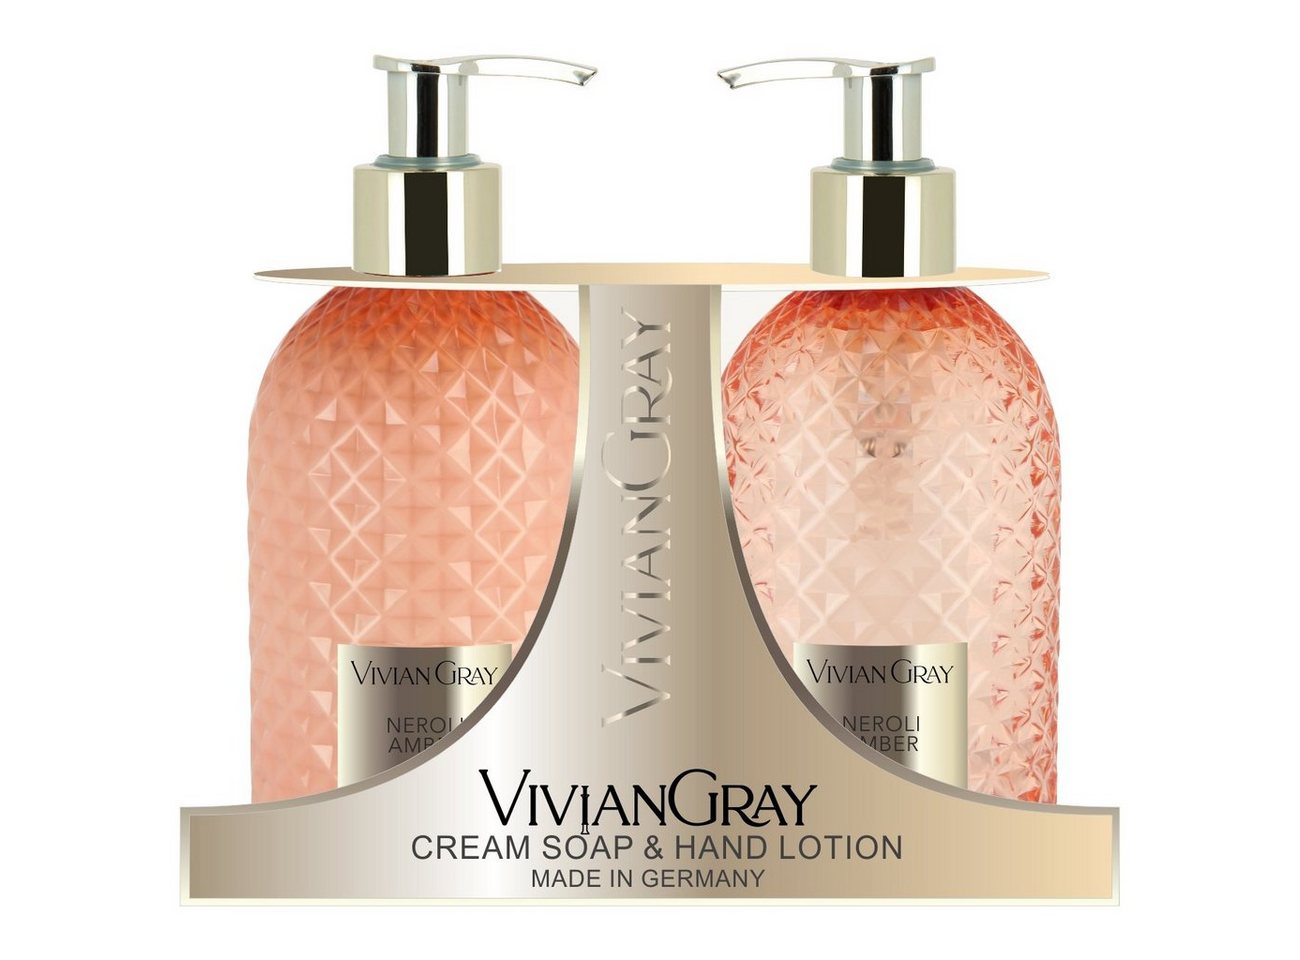 VIVIAN GRAY Hautreinigungs-Set Cremeseife & Hand Lotion Neroli & Amber von VIVIAN GRAY